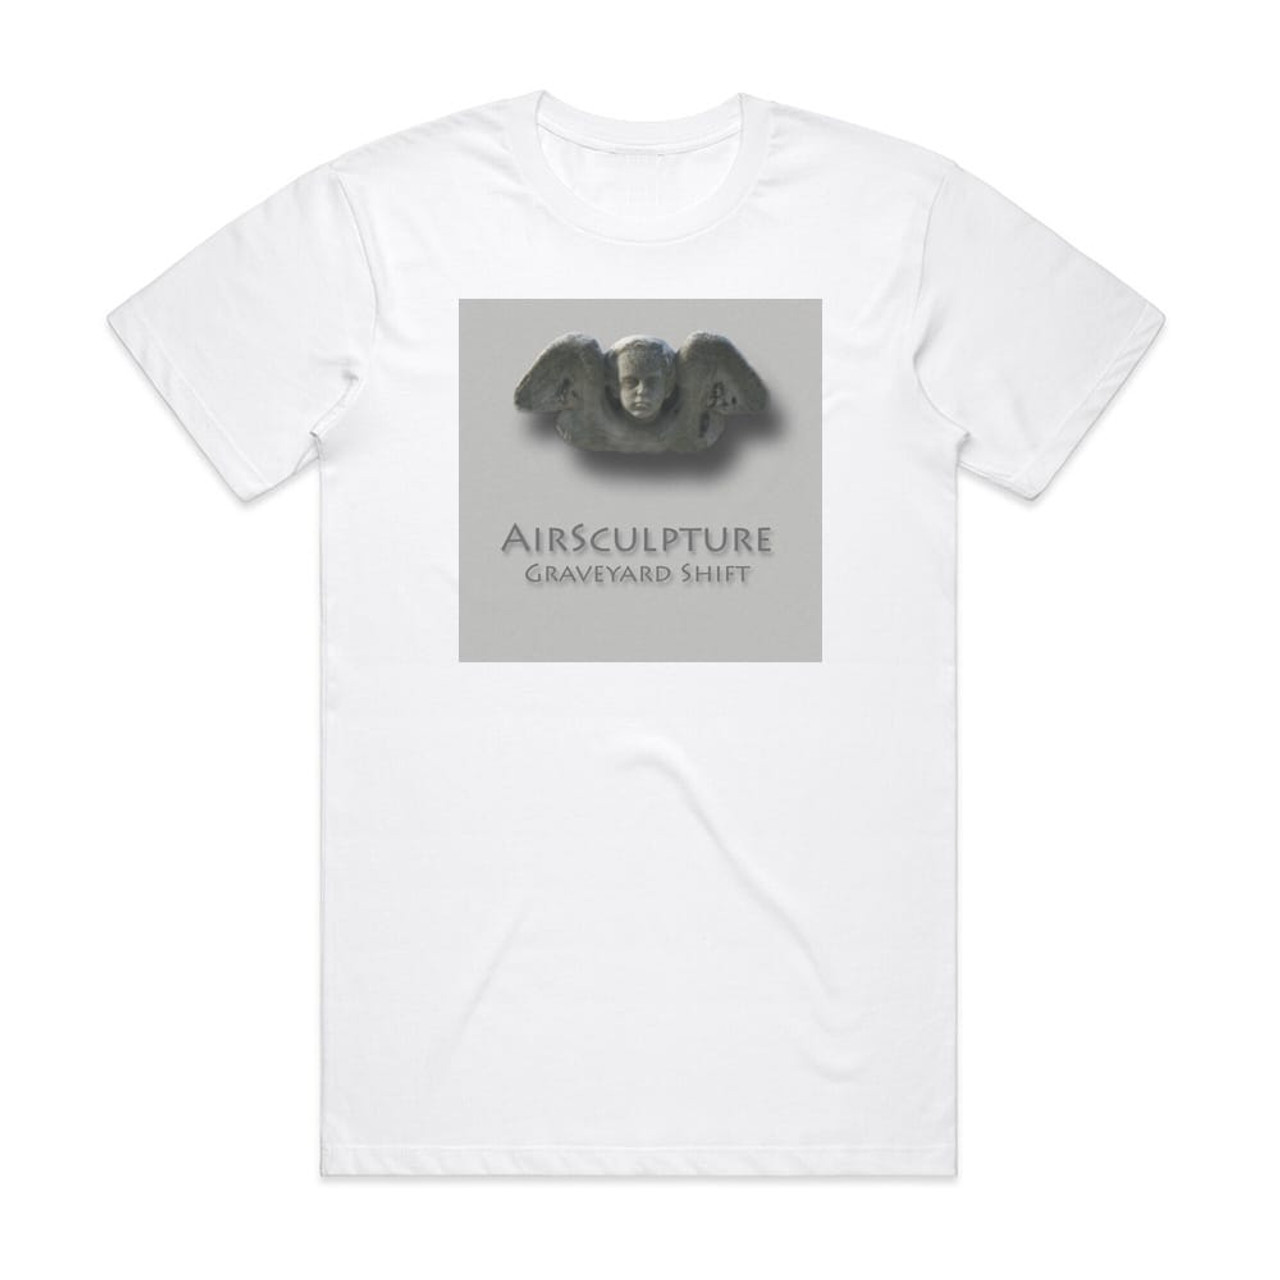 AirSculpture Graveyard Shift Album Cover T-Shirt White